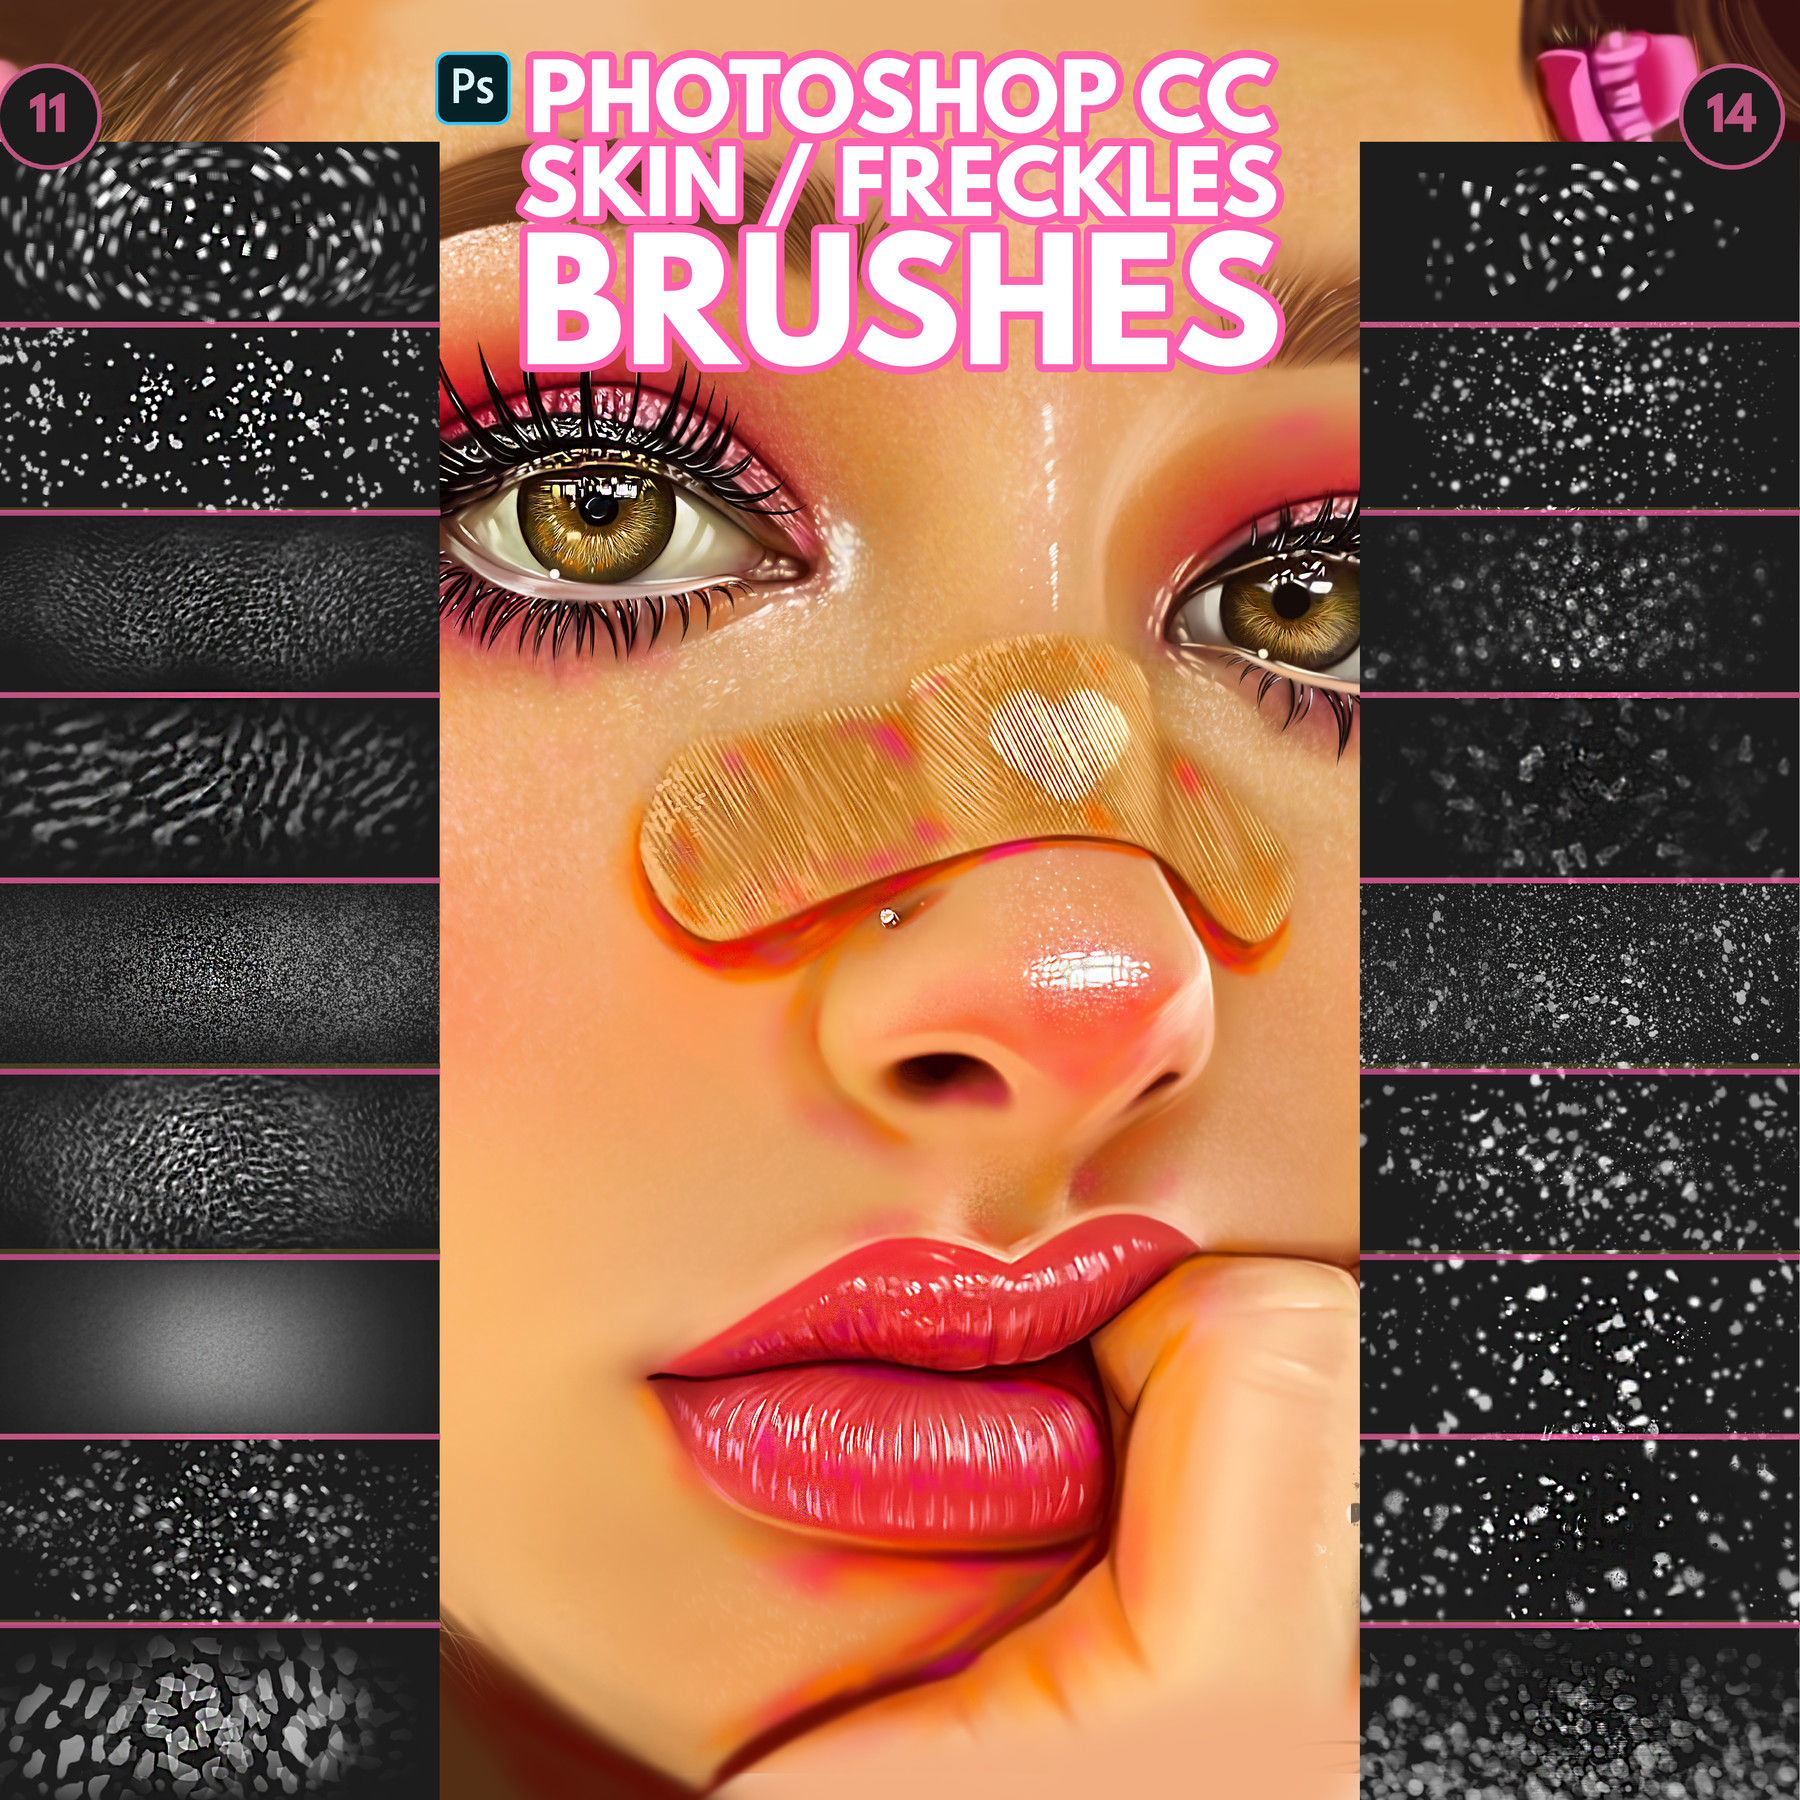 Artstation Skinfreckles Brushes For Photoshop Brushes